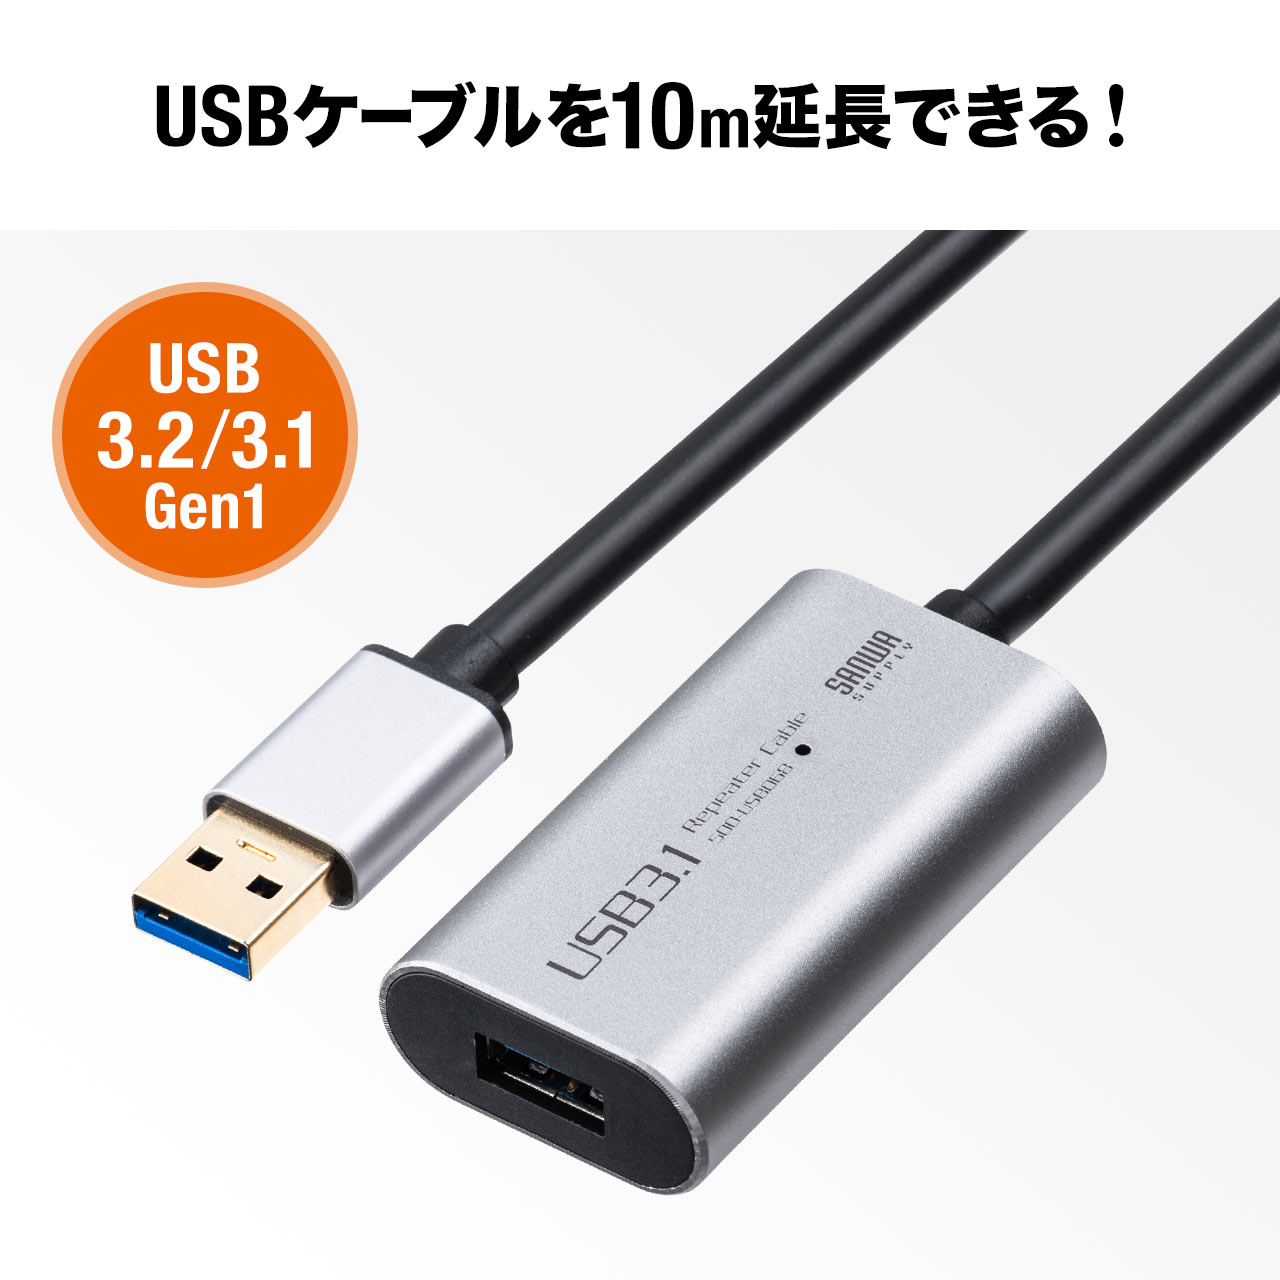 yő71%OFF匈ZՁzUSBP[u 10m USB 3.2 Gen1 ACA_v^ ANeBus[^[P[u 500-USB068